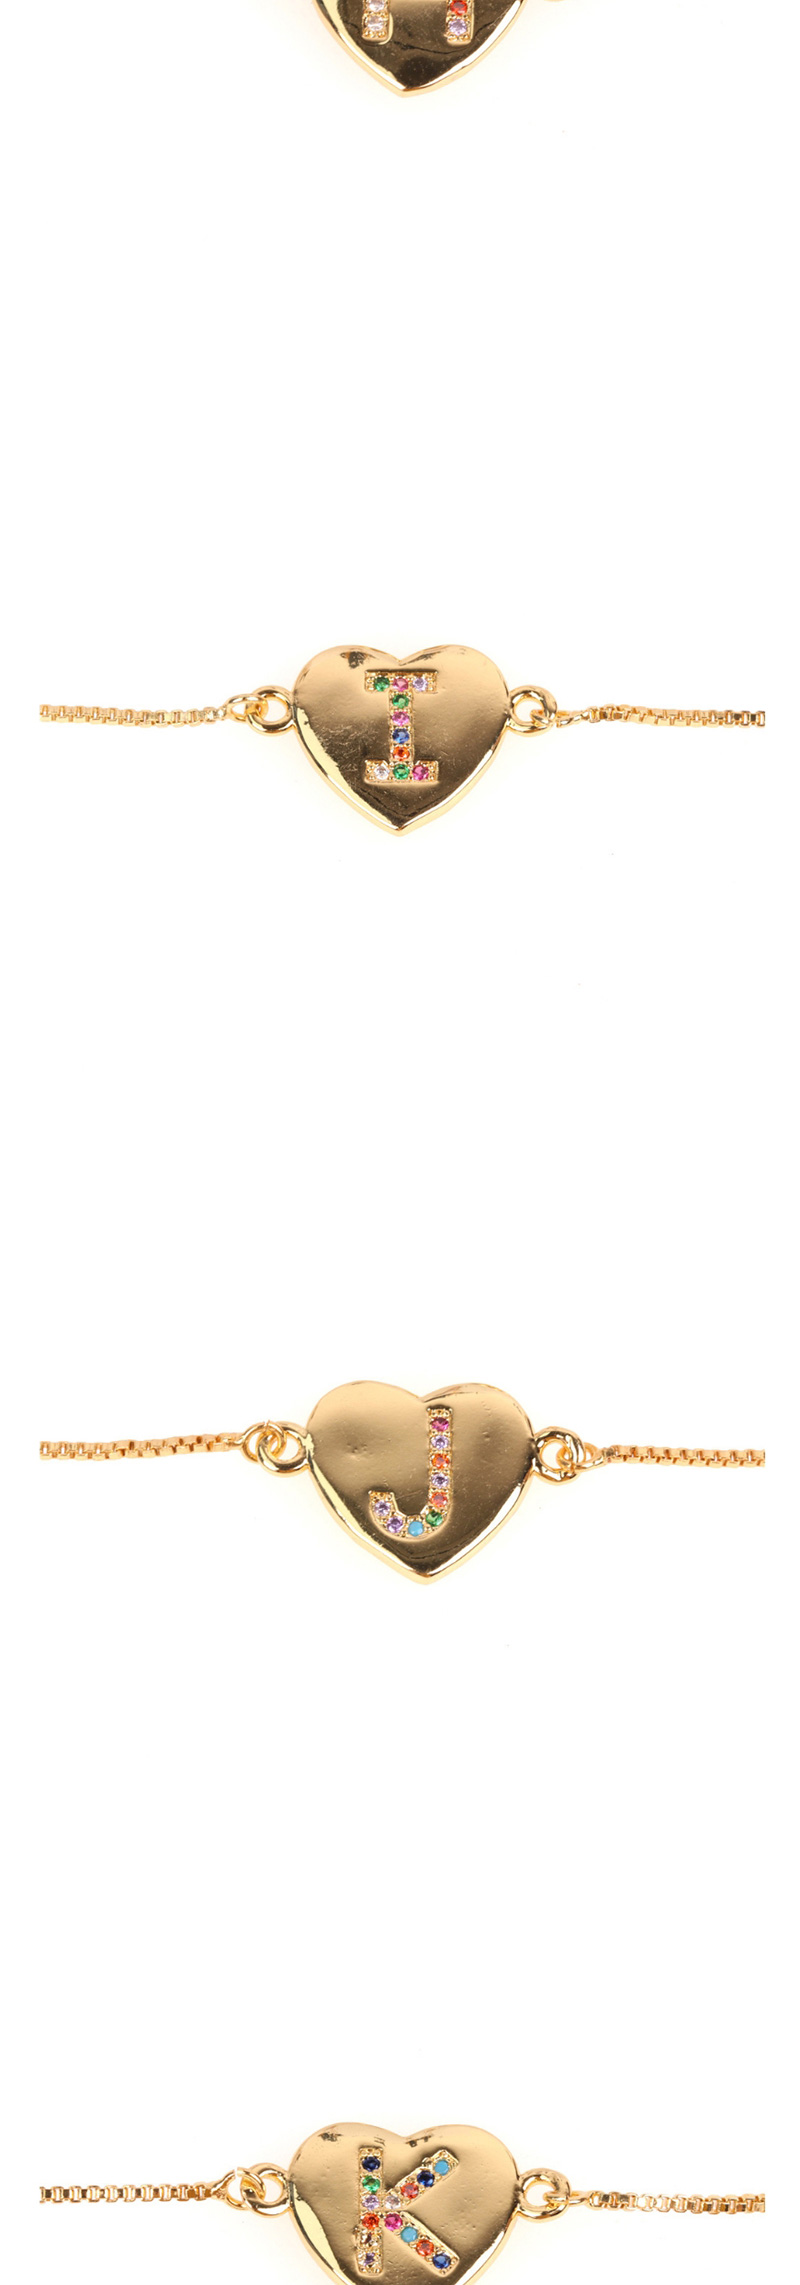 Fashion P Golden Heart Bracelet With Diamonds And Letters,Bracelets